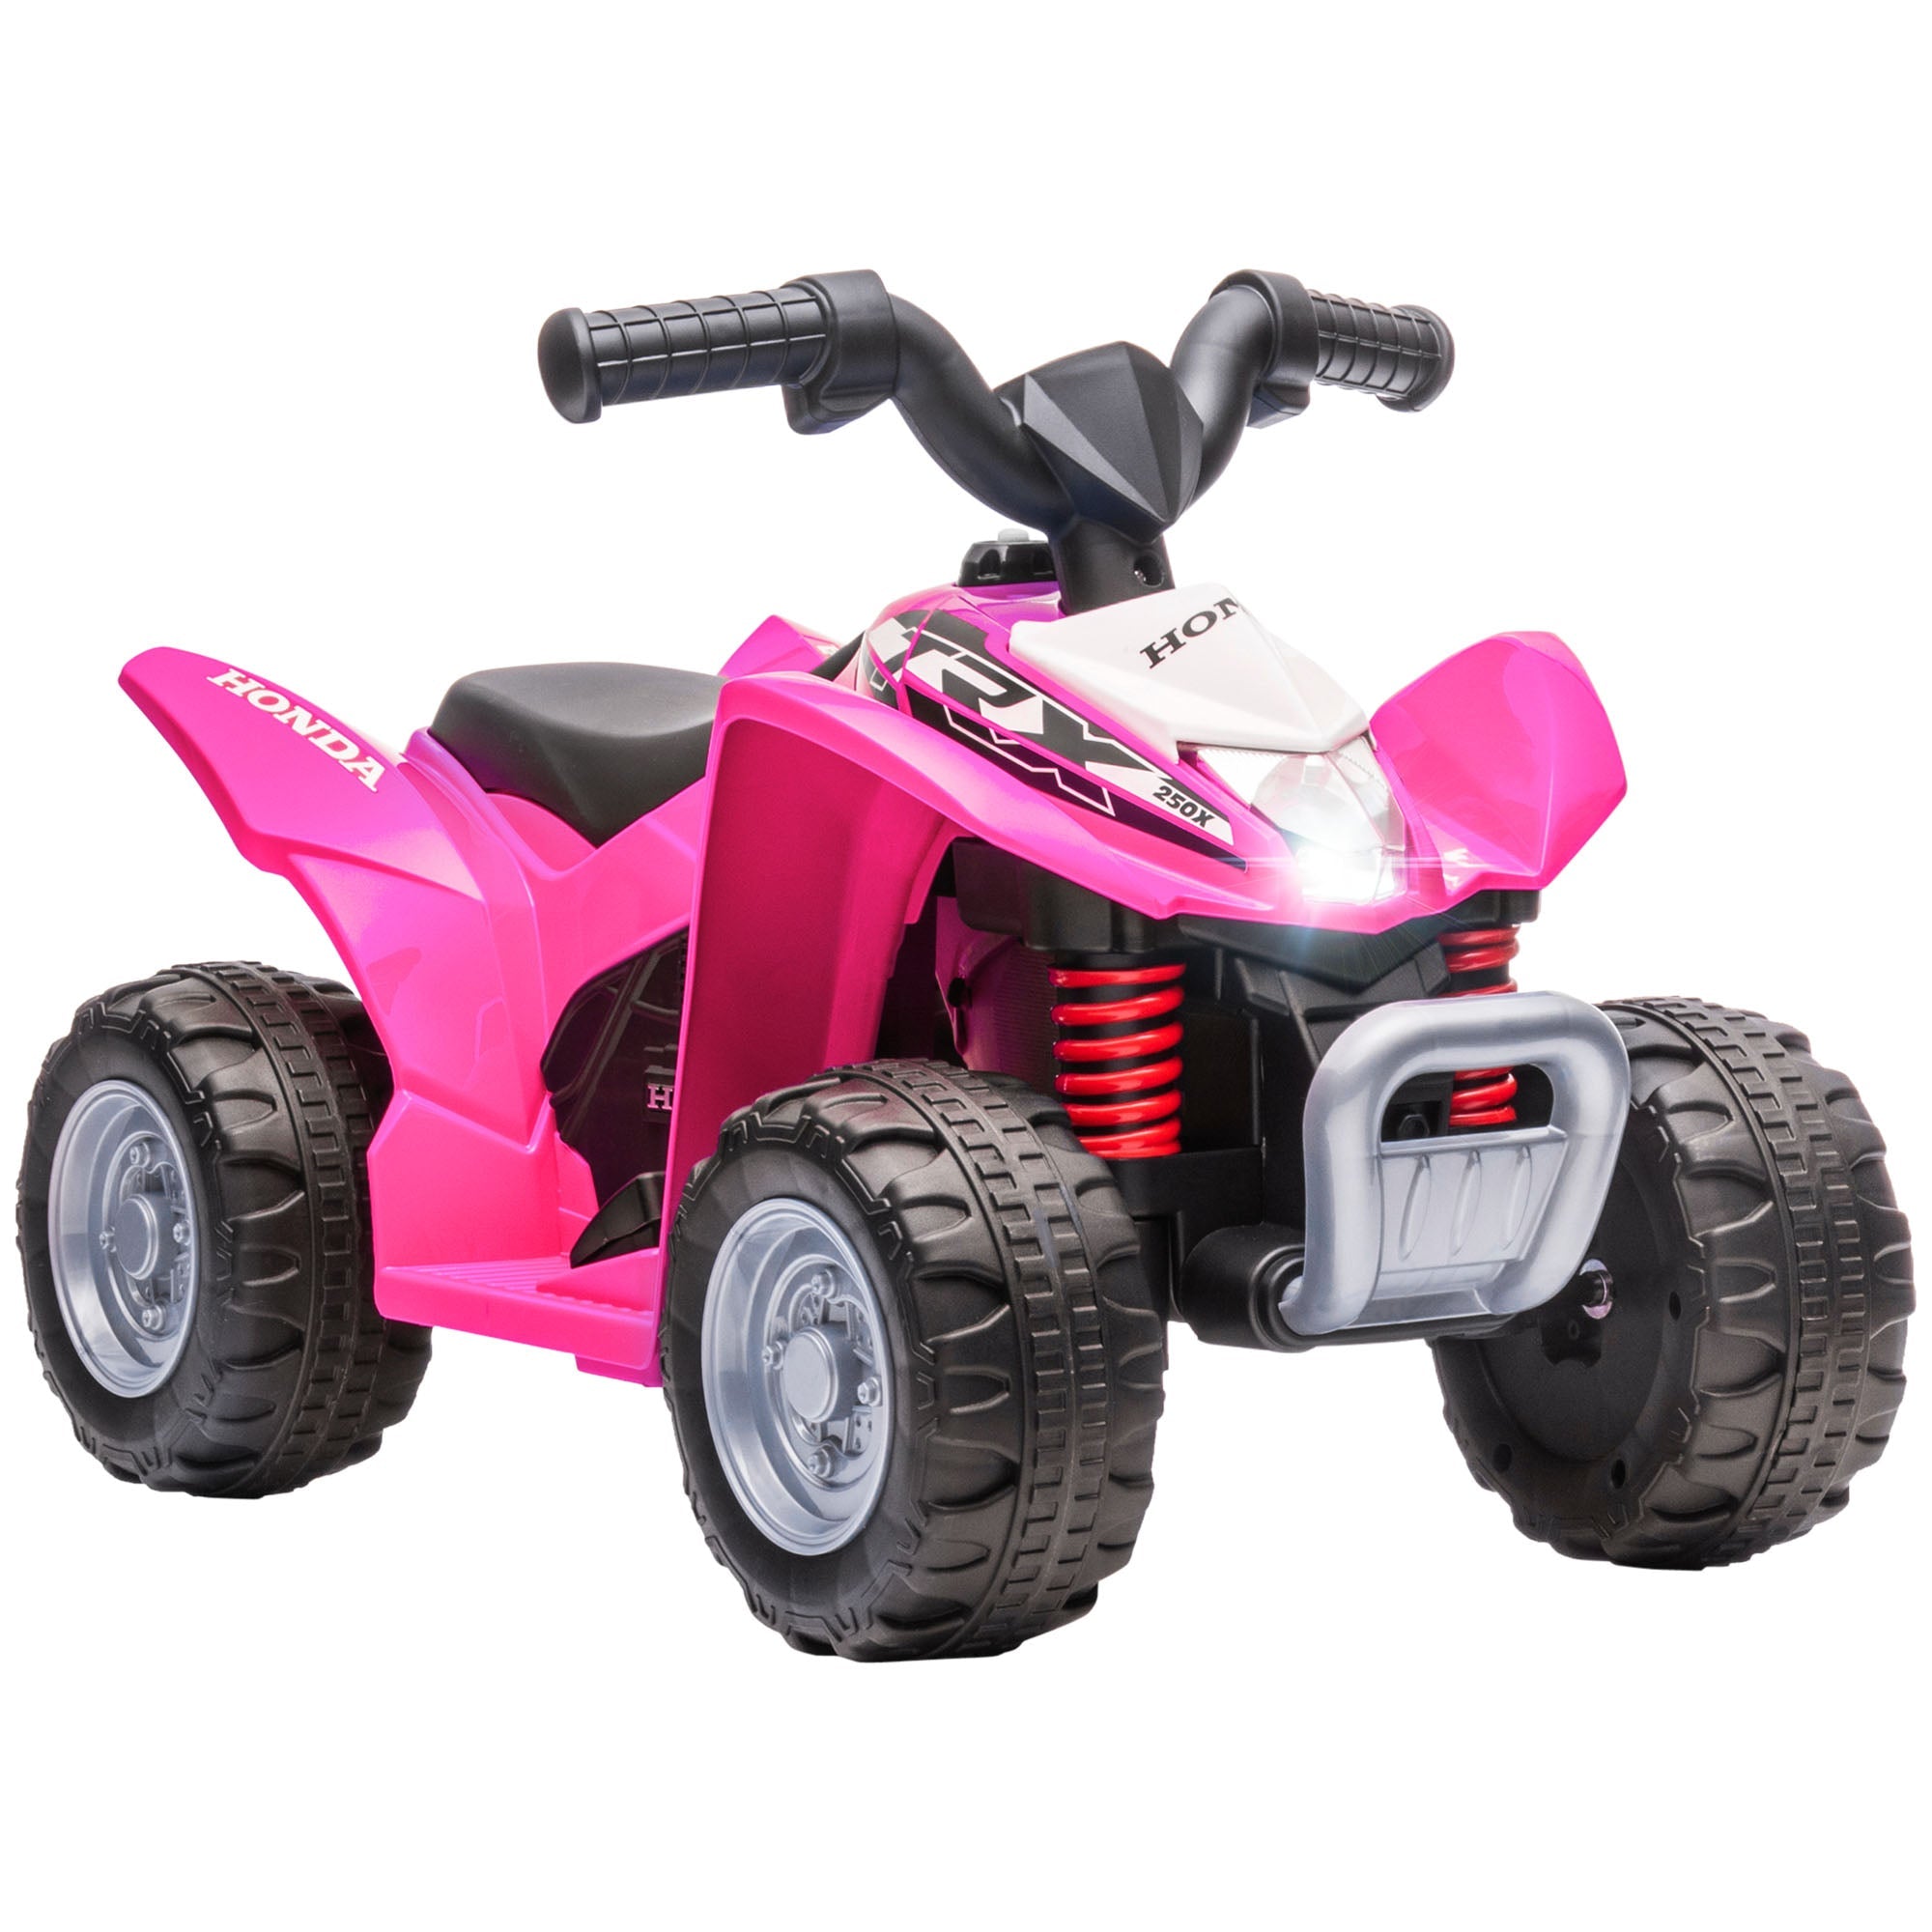 HOMCOM AIYAPLAY Honda Licensed 6V Electric Ride On Kids Toy ATV Quad Bike with LED Lights & Horn for 1.5-3 Years (Pink)